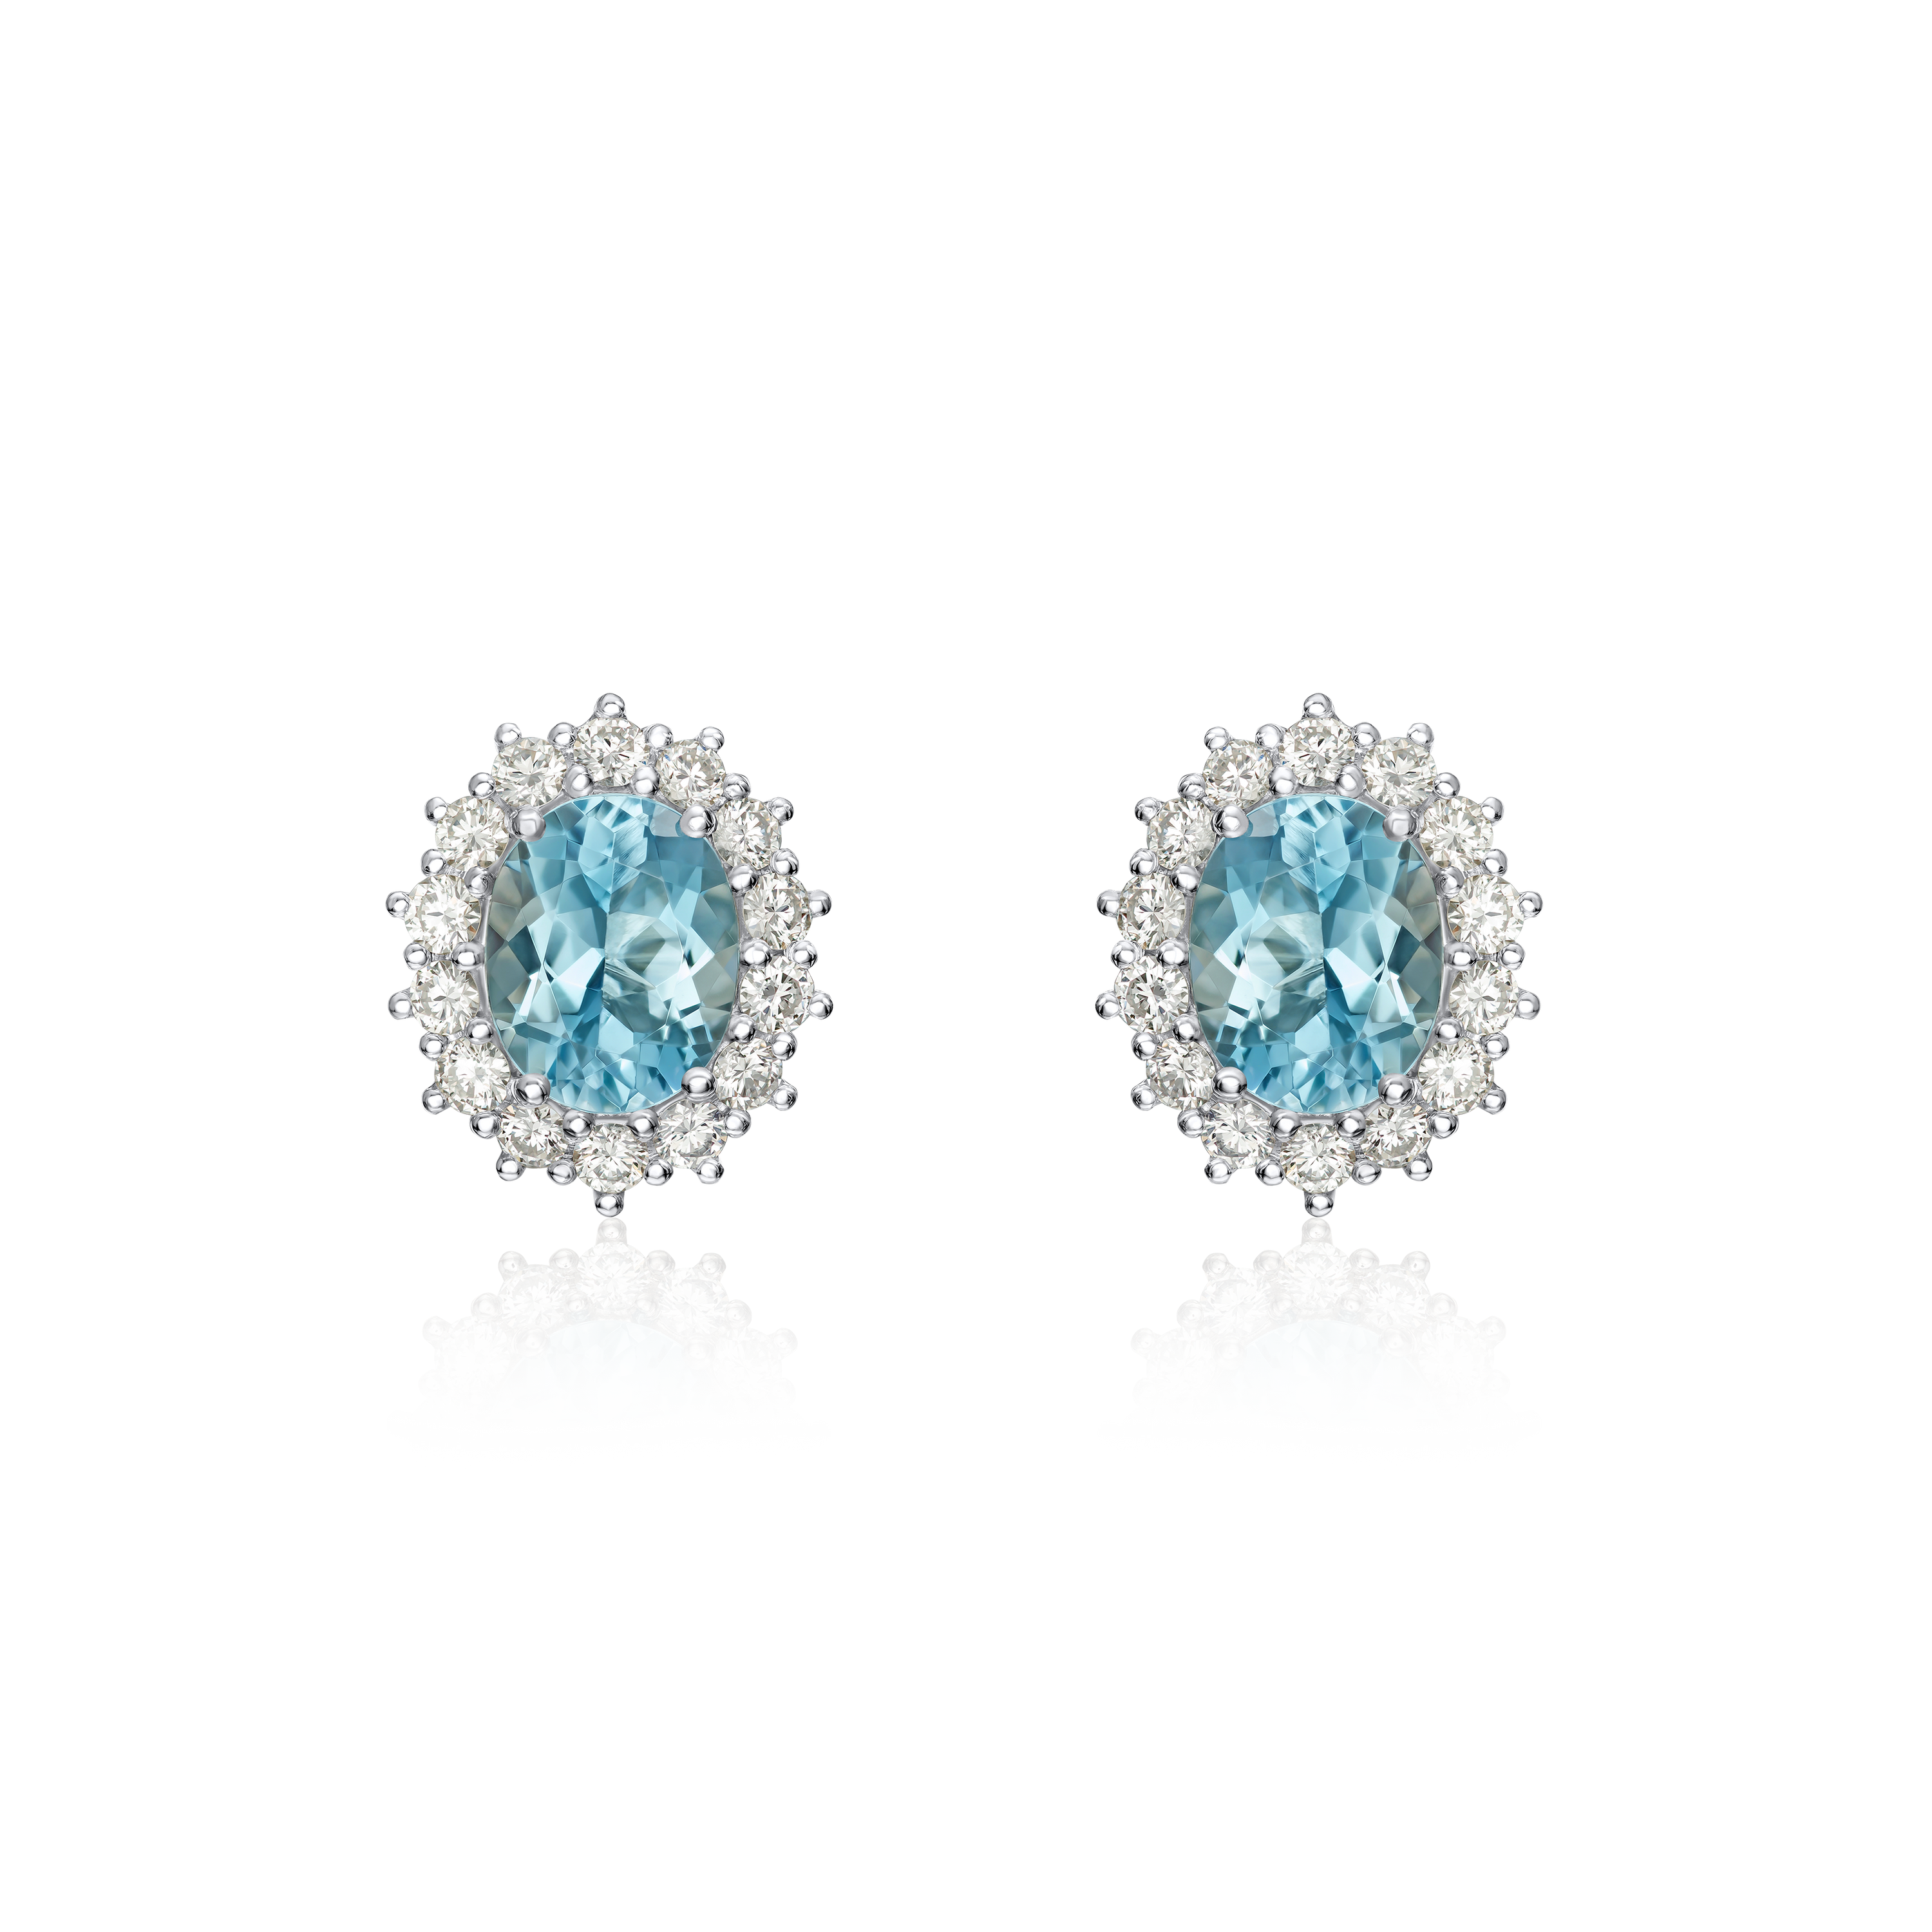 Oval Aquamarine and Diamond Cluster Earrings